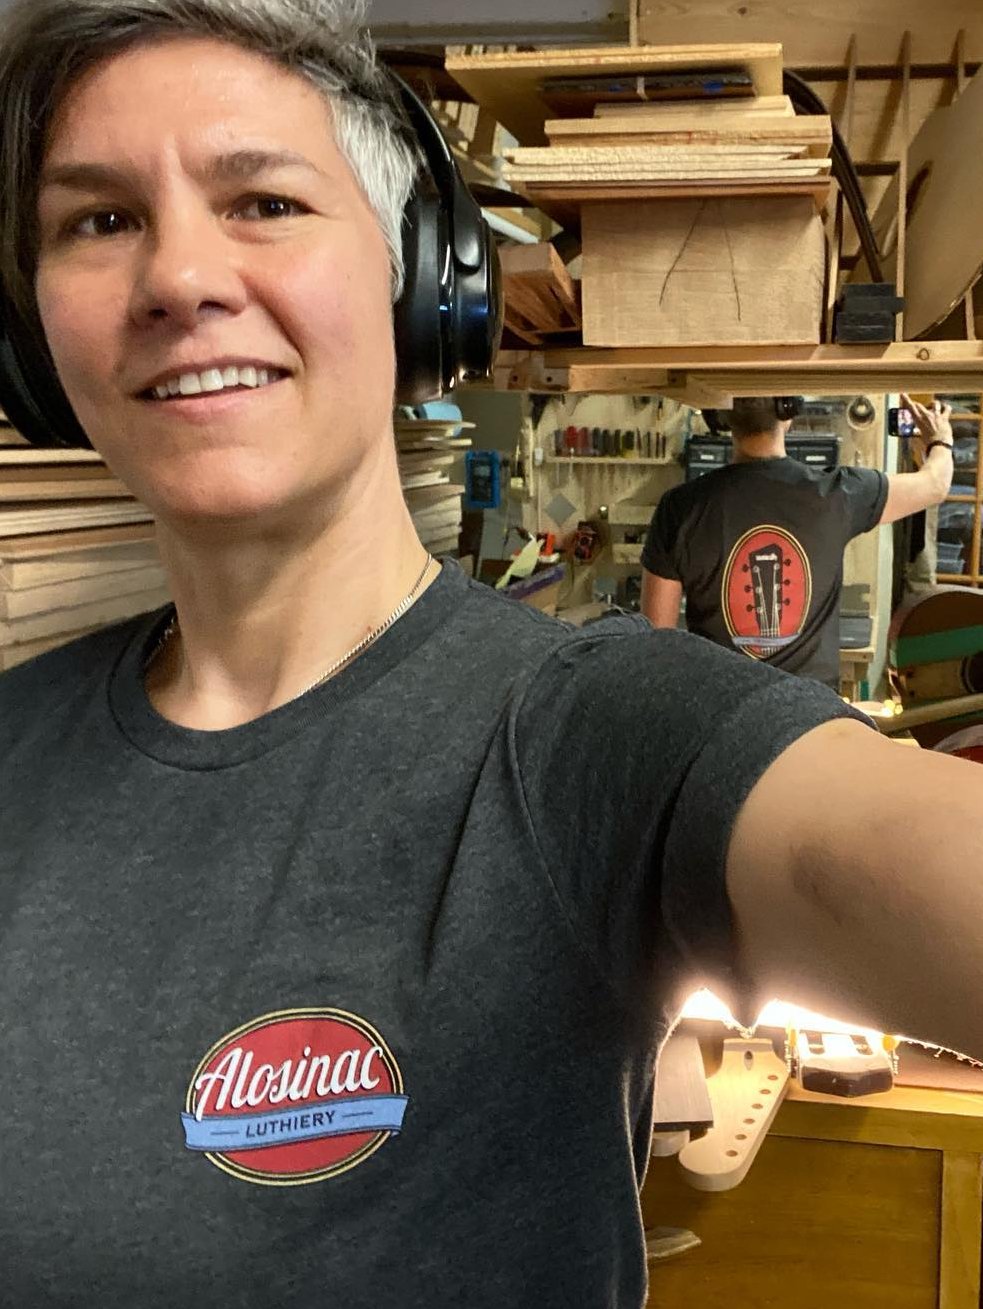 Nicole Alosinac Luthiery tshirts